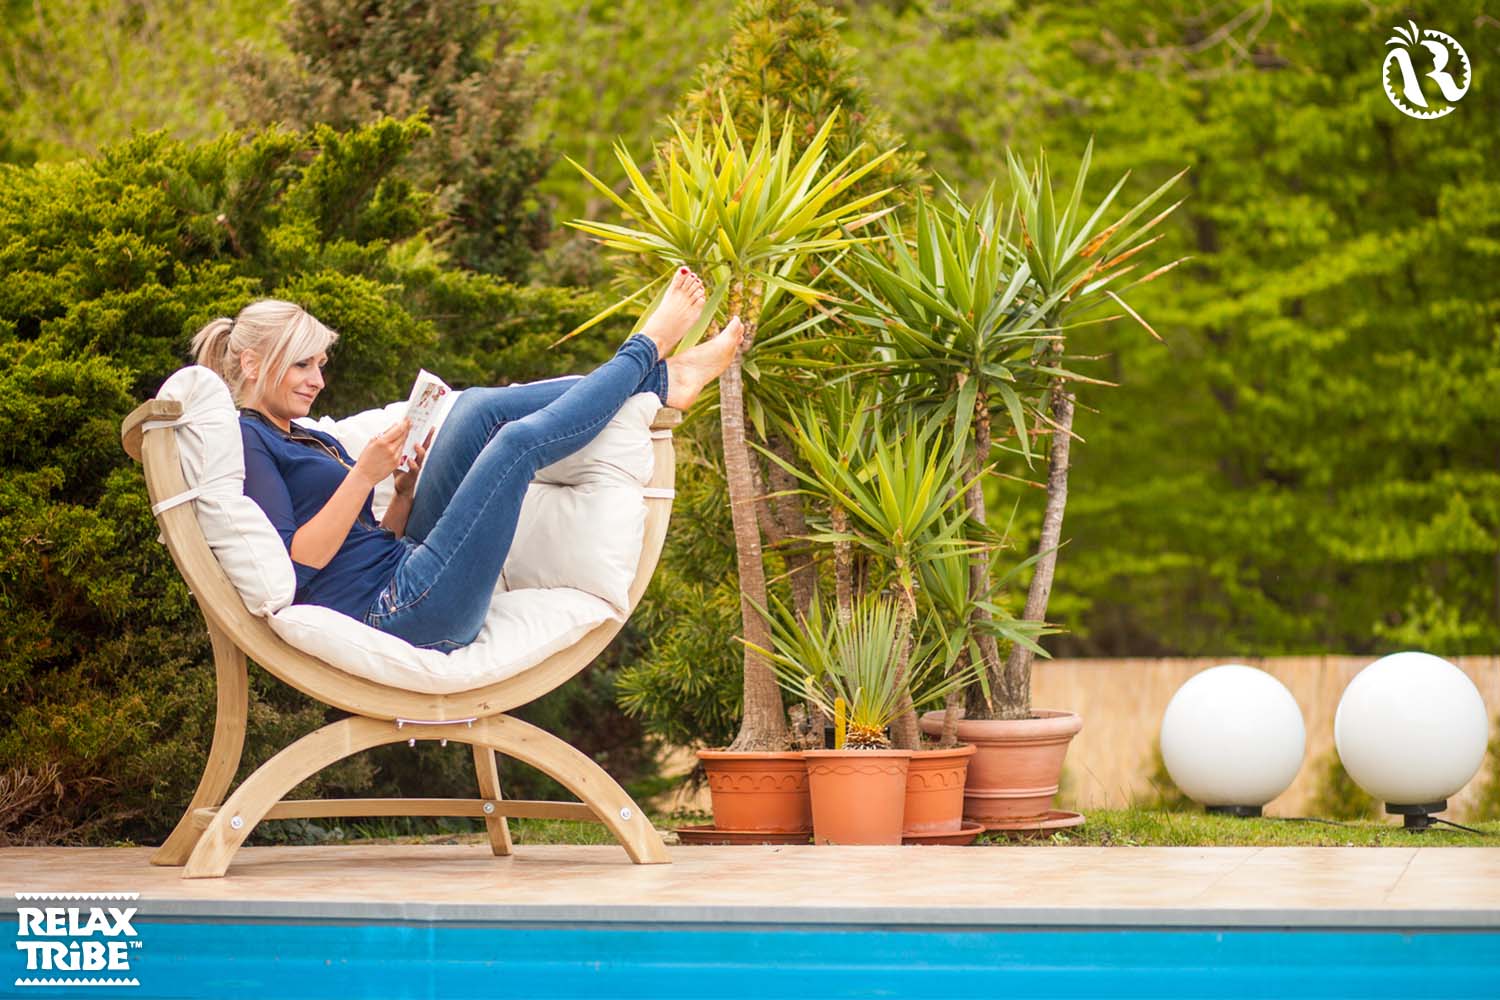 siena-uno-natura-single-home-garden-lounge-armchair-fsc-wood-cushion-weatherproof-white-cream-pool-patio-backyard